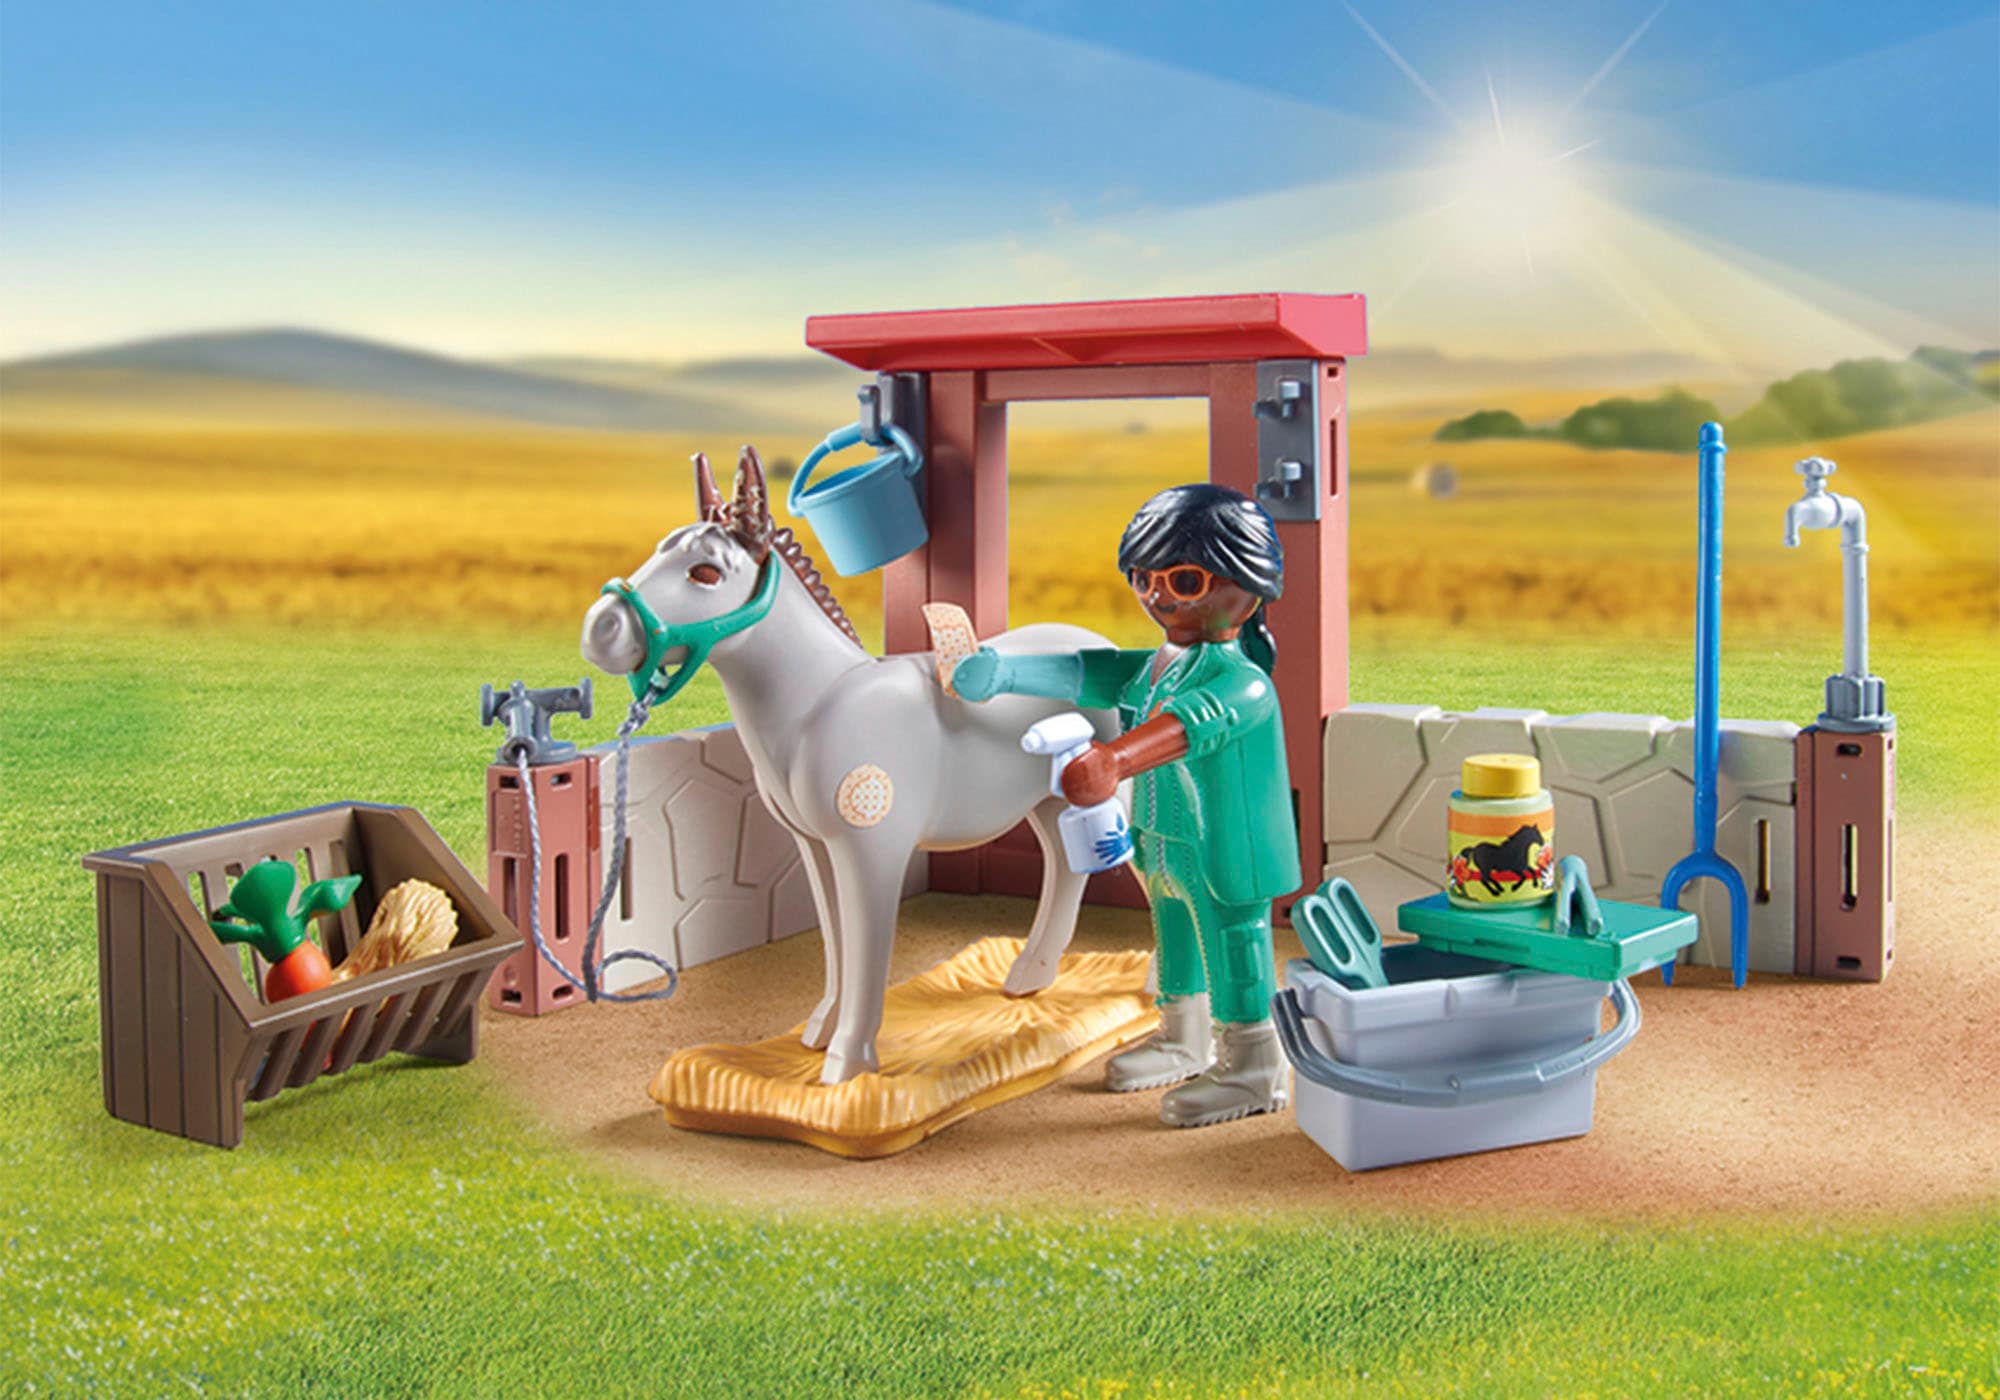 Playmobil® Konstruktions-Spielset »Tierarzteinsatz bei den Eseln (71471), Country«, (55 St.), teilweise aus recyceltem Material; Made in Europe